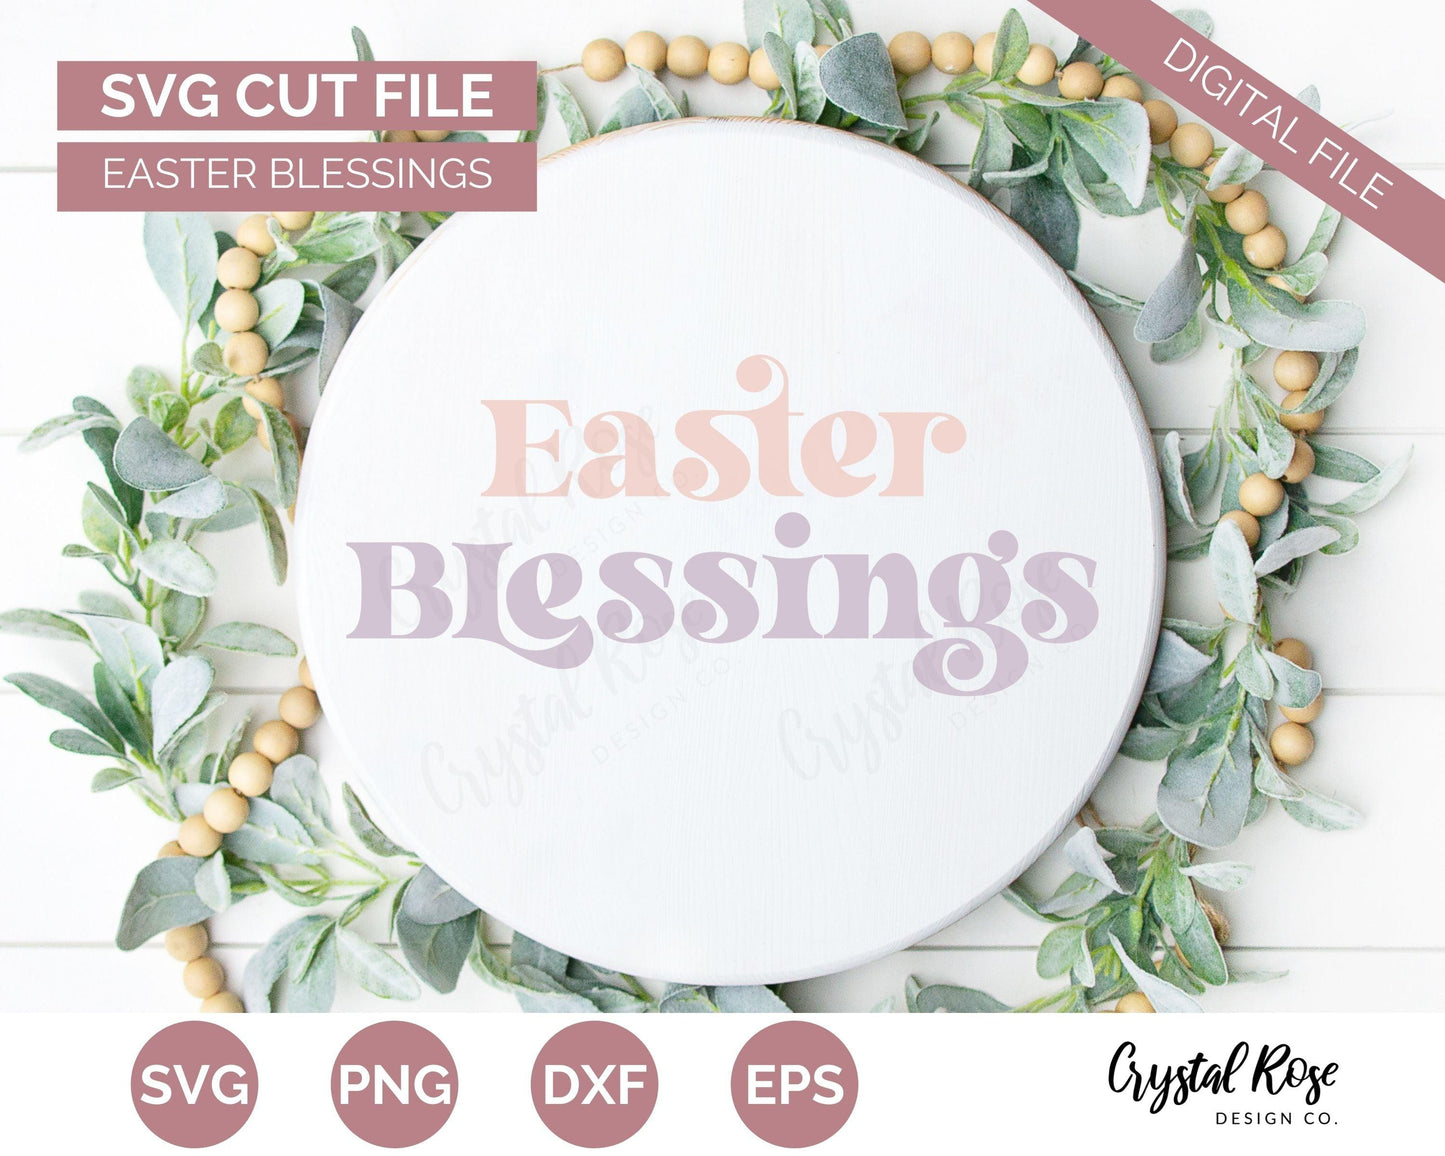 Easter Blessings SVG, Easter SVG, Digital Download, Cricut, Silhouette, Glowforge (includes svg/png/dxf/eps) - Crystal Rose Design Co.